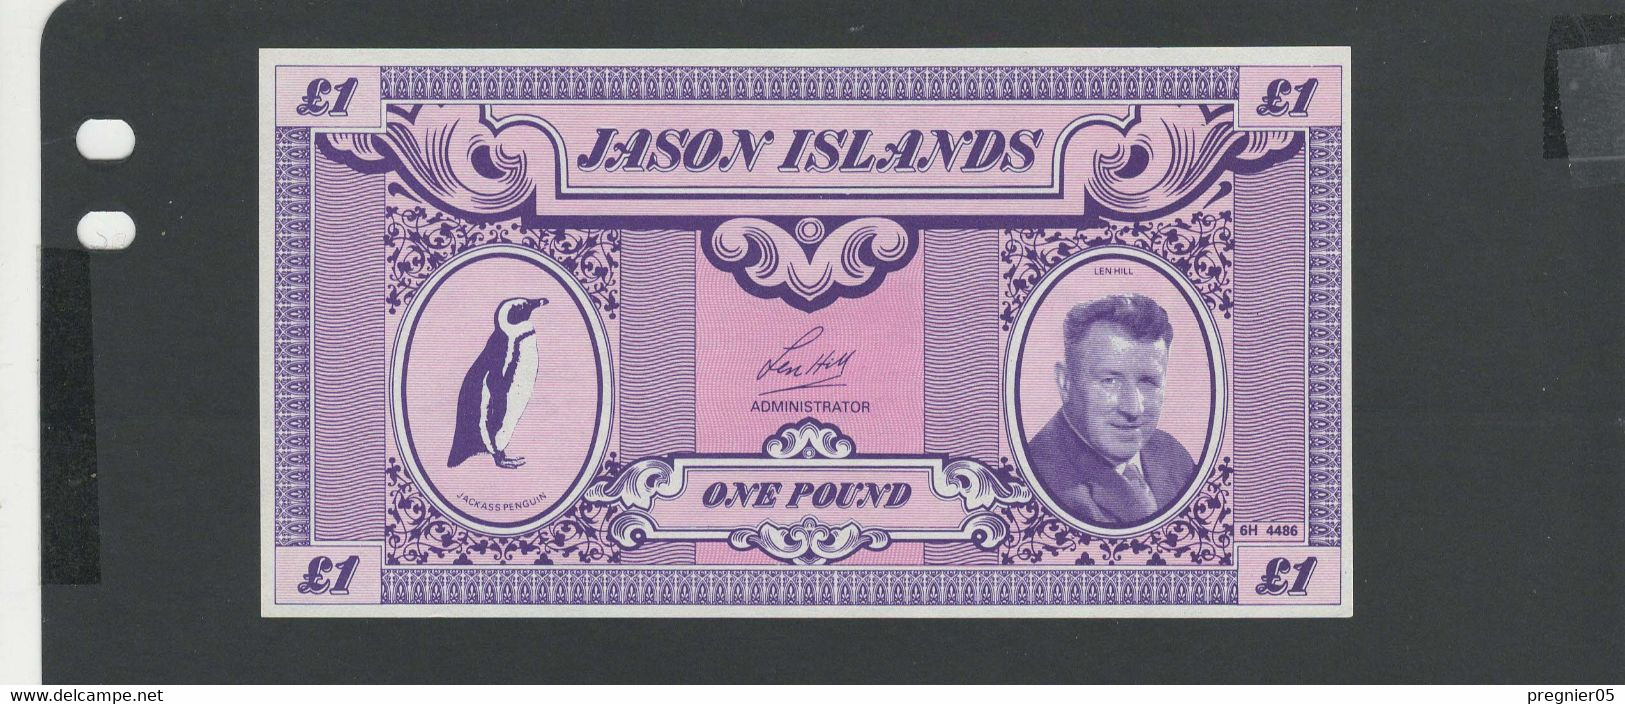 FALKLAND - JASON - Billet 1 Livre 1978 NEUF/UNC - Falklandeilanden